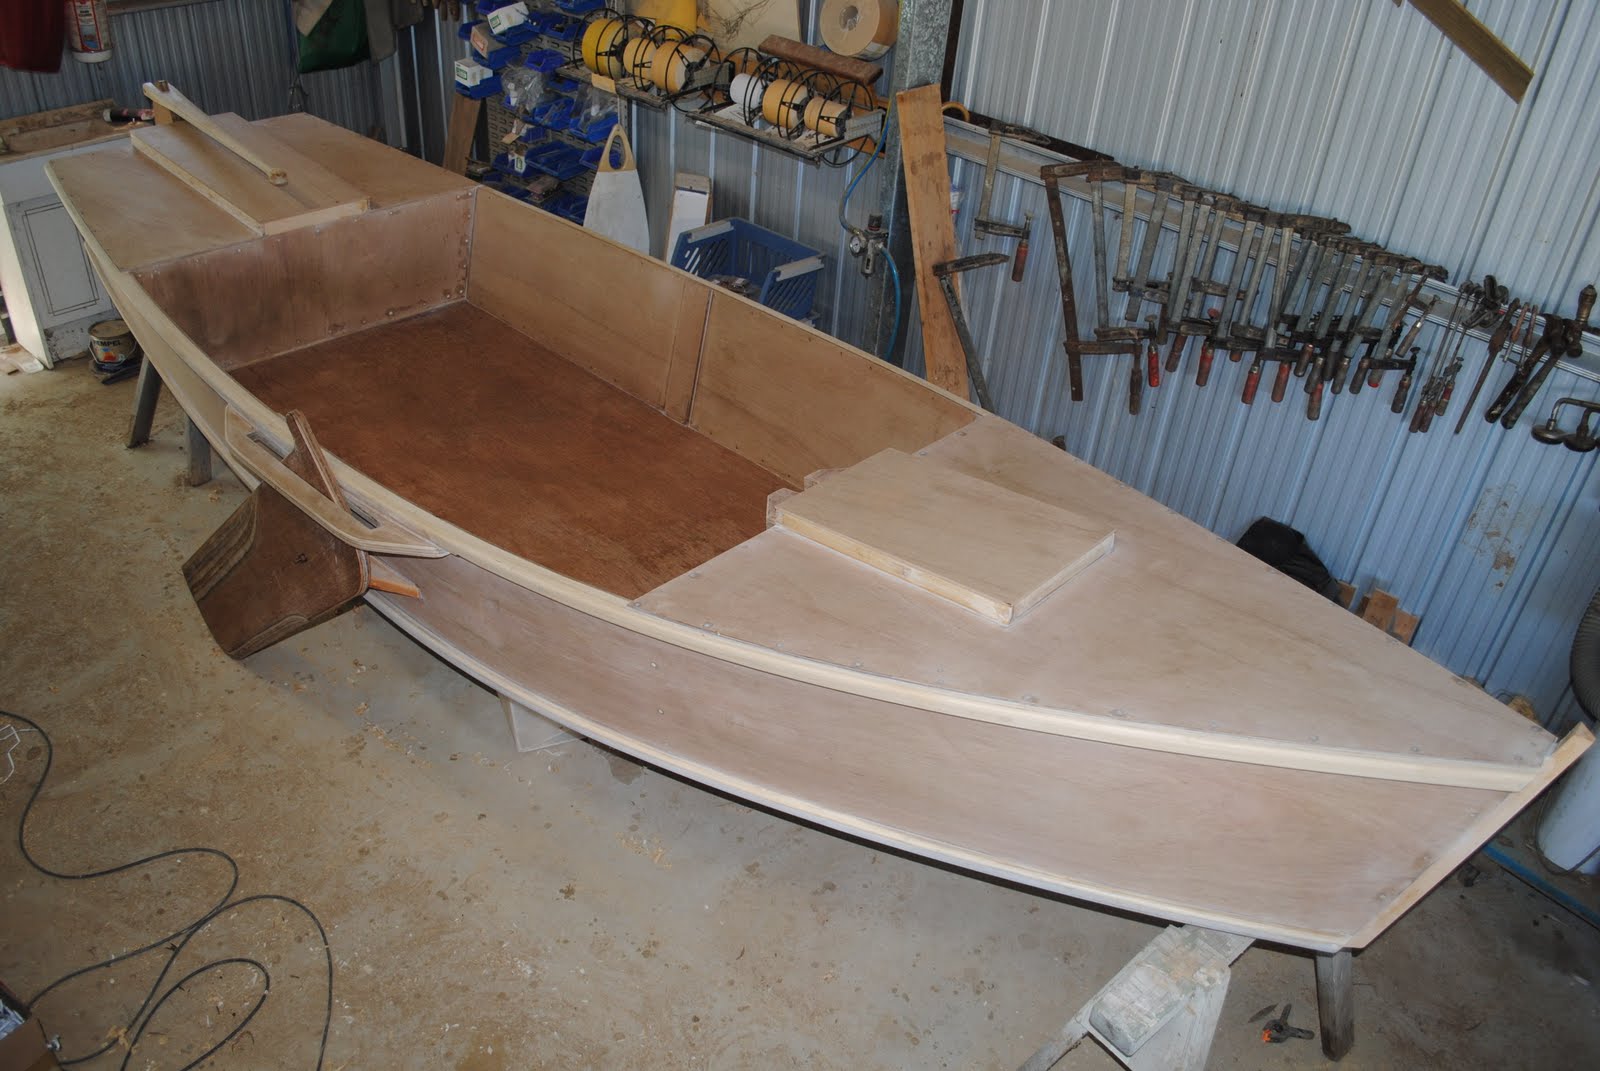 Ross Lillistone Wooden Boats: Photos of a Good Flat 